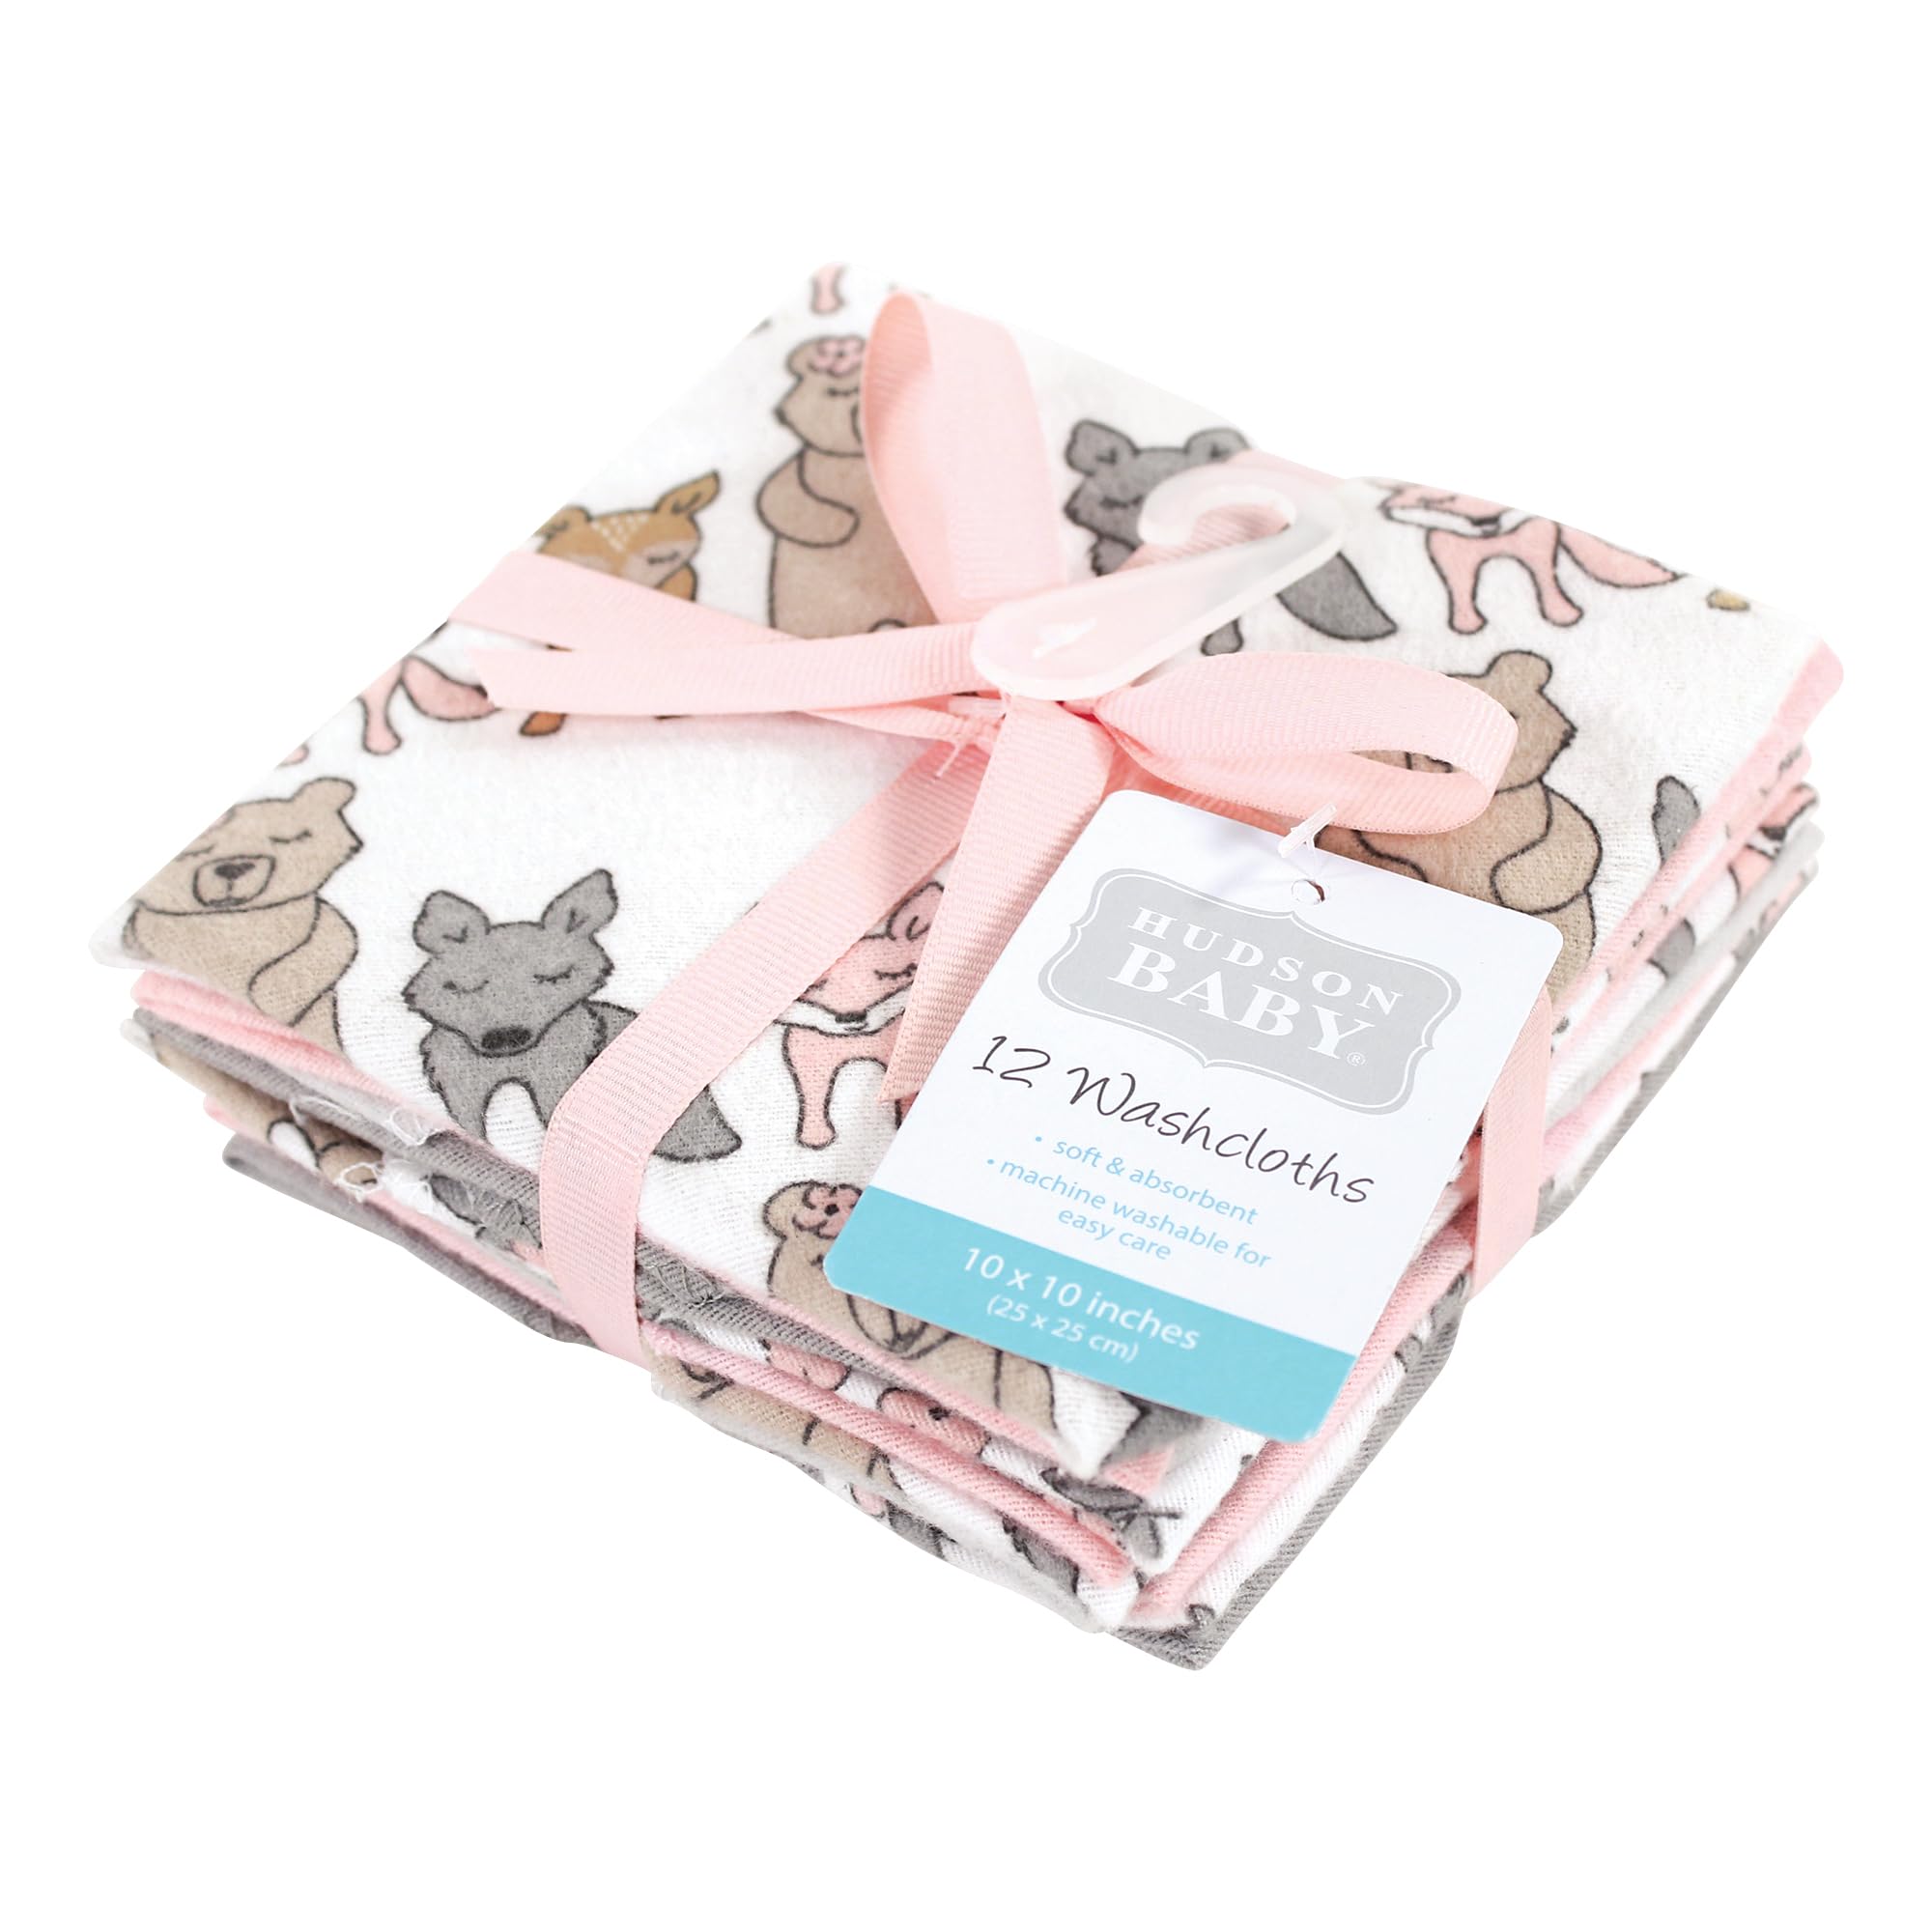 Hudson Baby Unisex Baby Flannel Cotton Washcloths 12-Pack, Wild Forest Pink, One Size